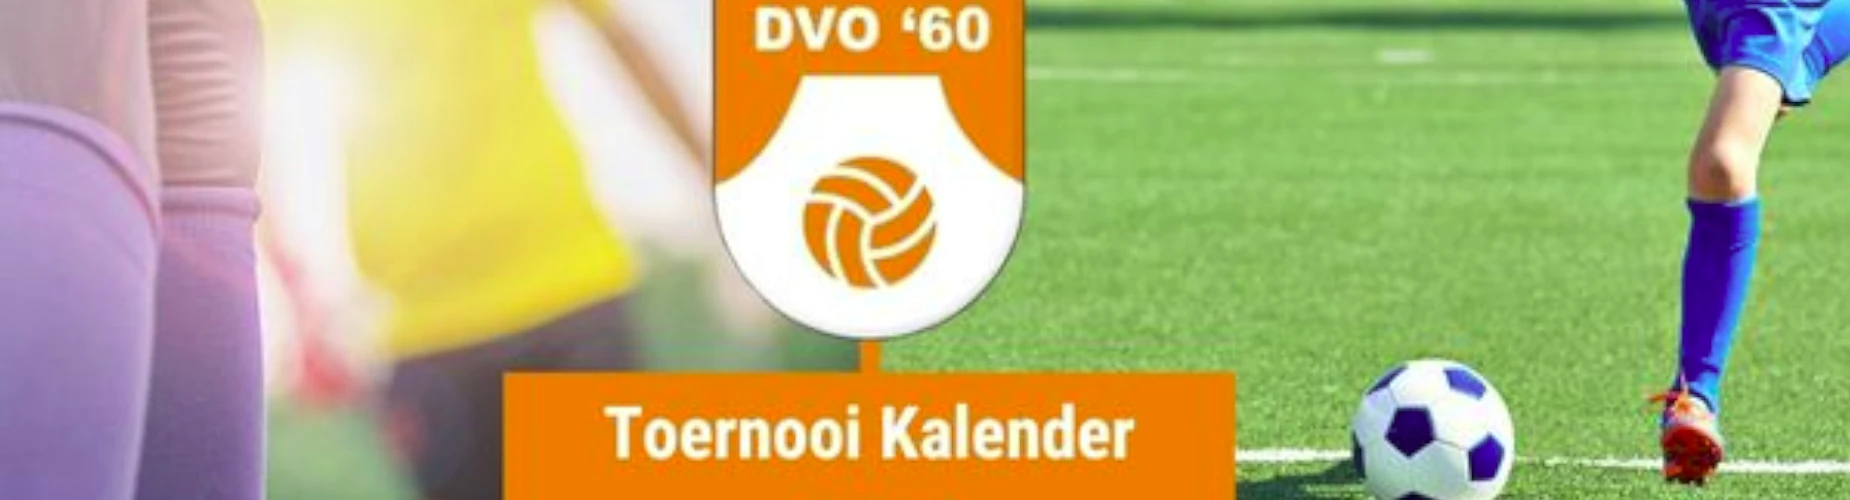 Banner - DVO 60 Jeugdtoernooi - vv DVO’60 - Roosendaal